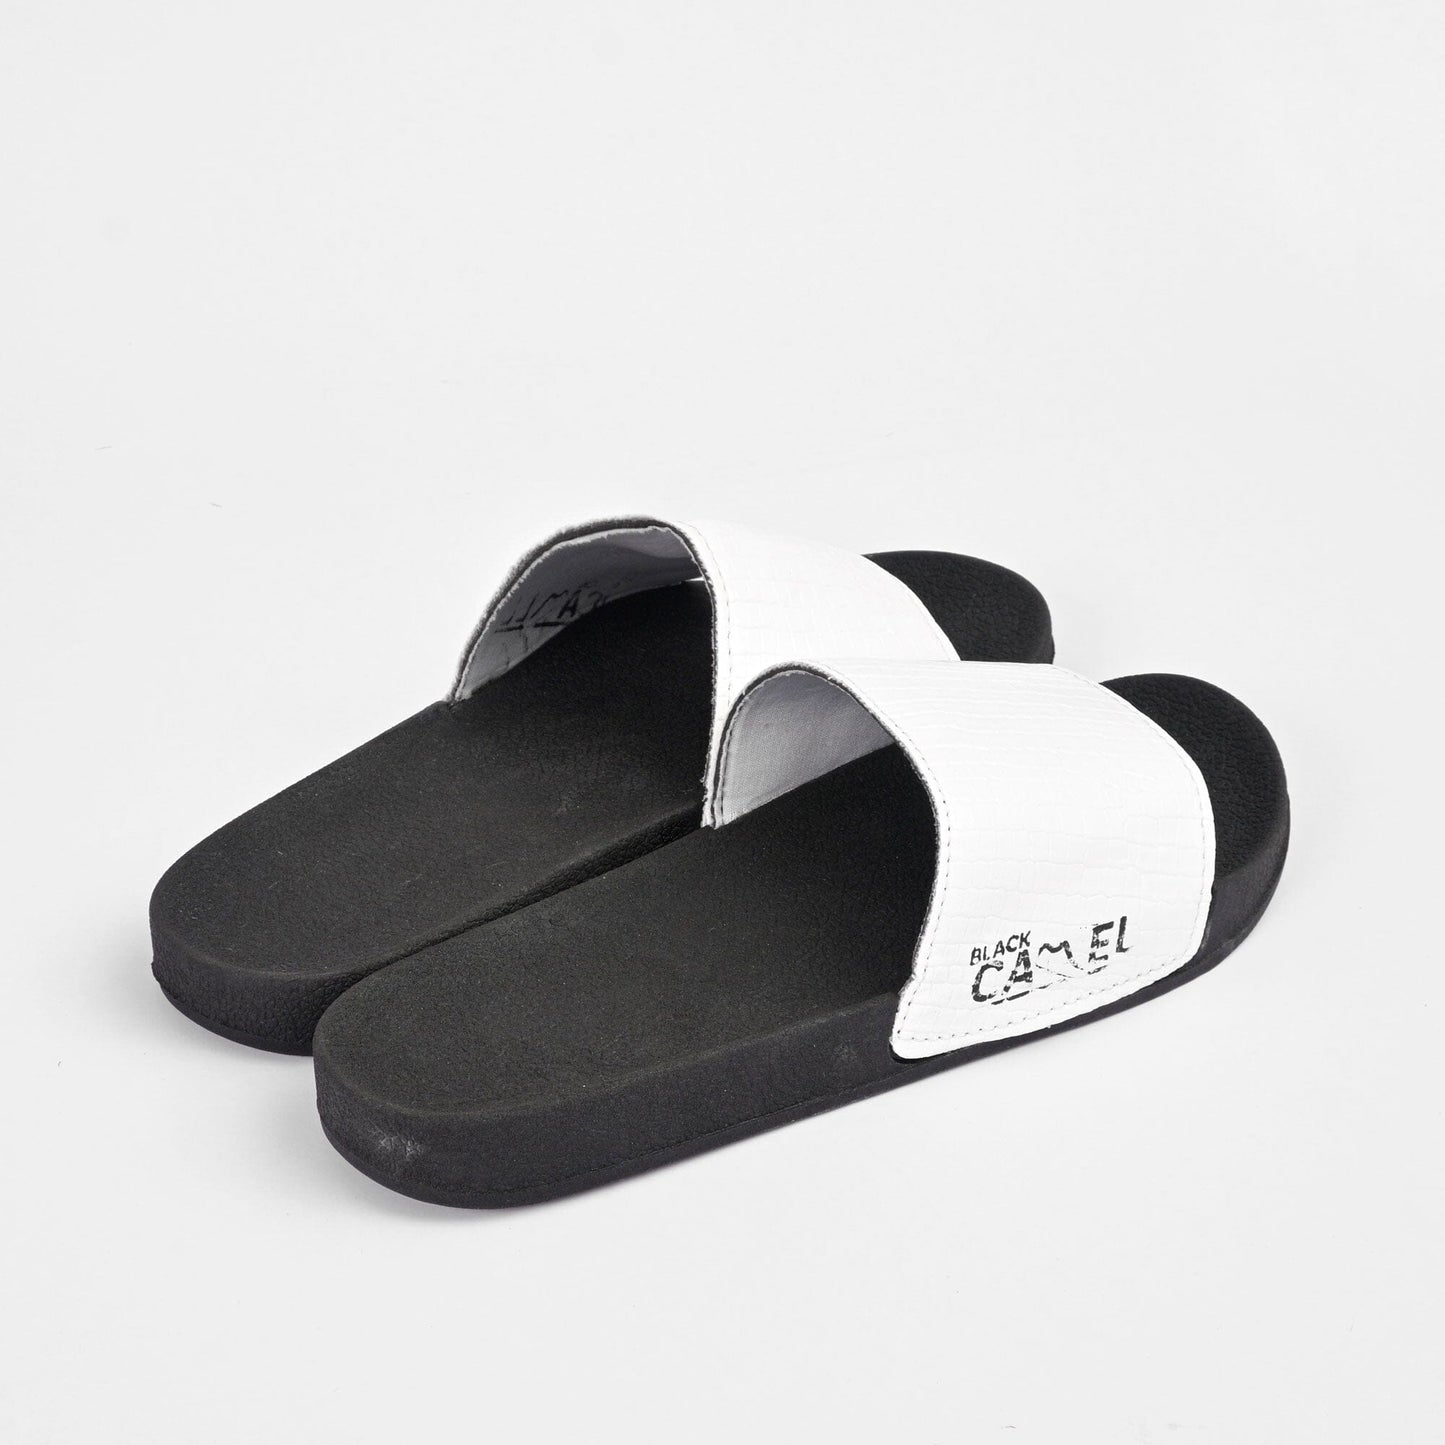 Black Camel Men's Zluver Texture Style Printed Design Slides Men's Shoes Hamza Traders 